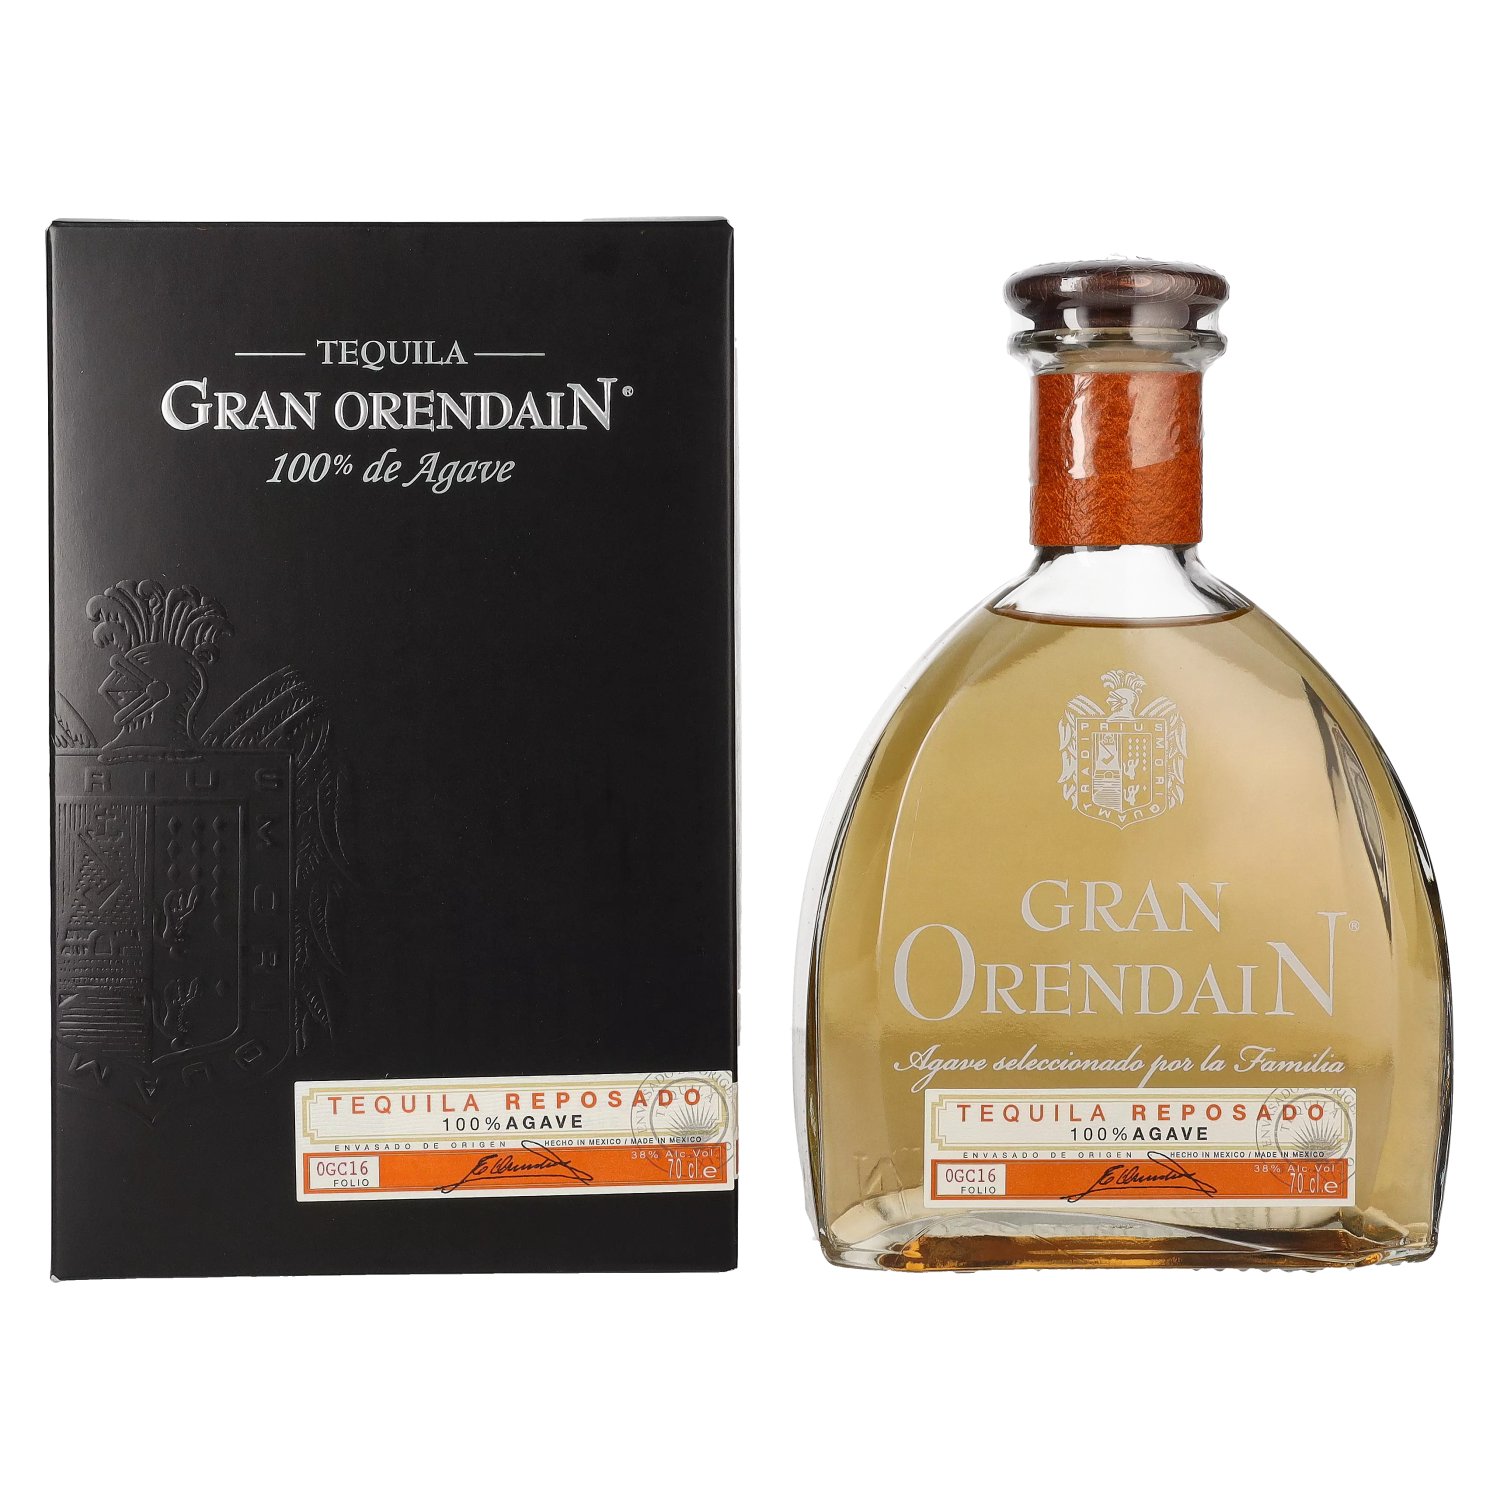 REPOSADO Gran 38% Orendain Giftbox in Agave 0,7l Tequila Vol. 100%